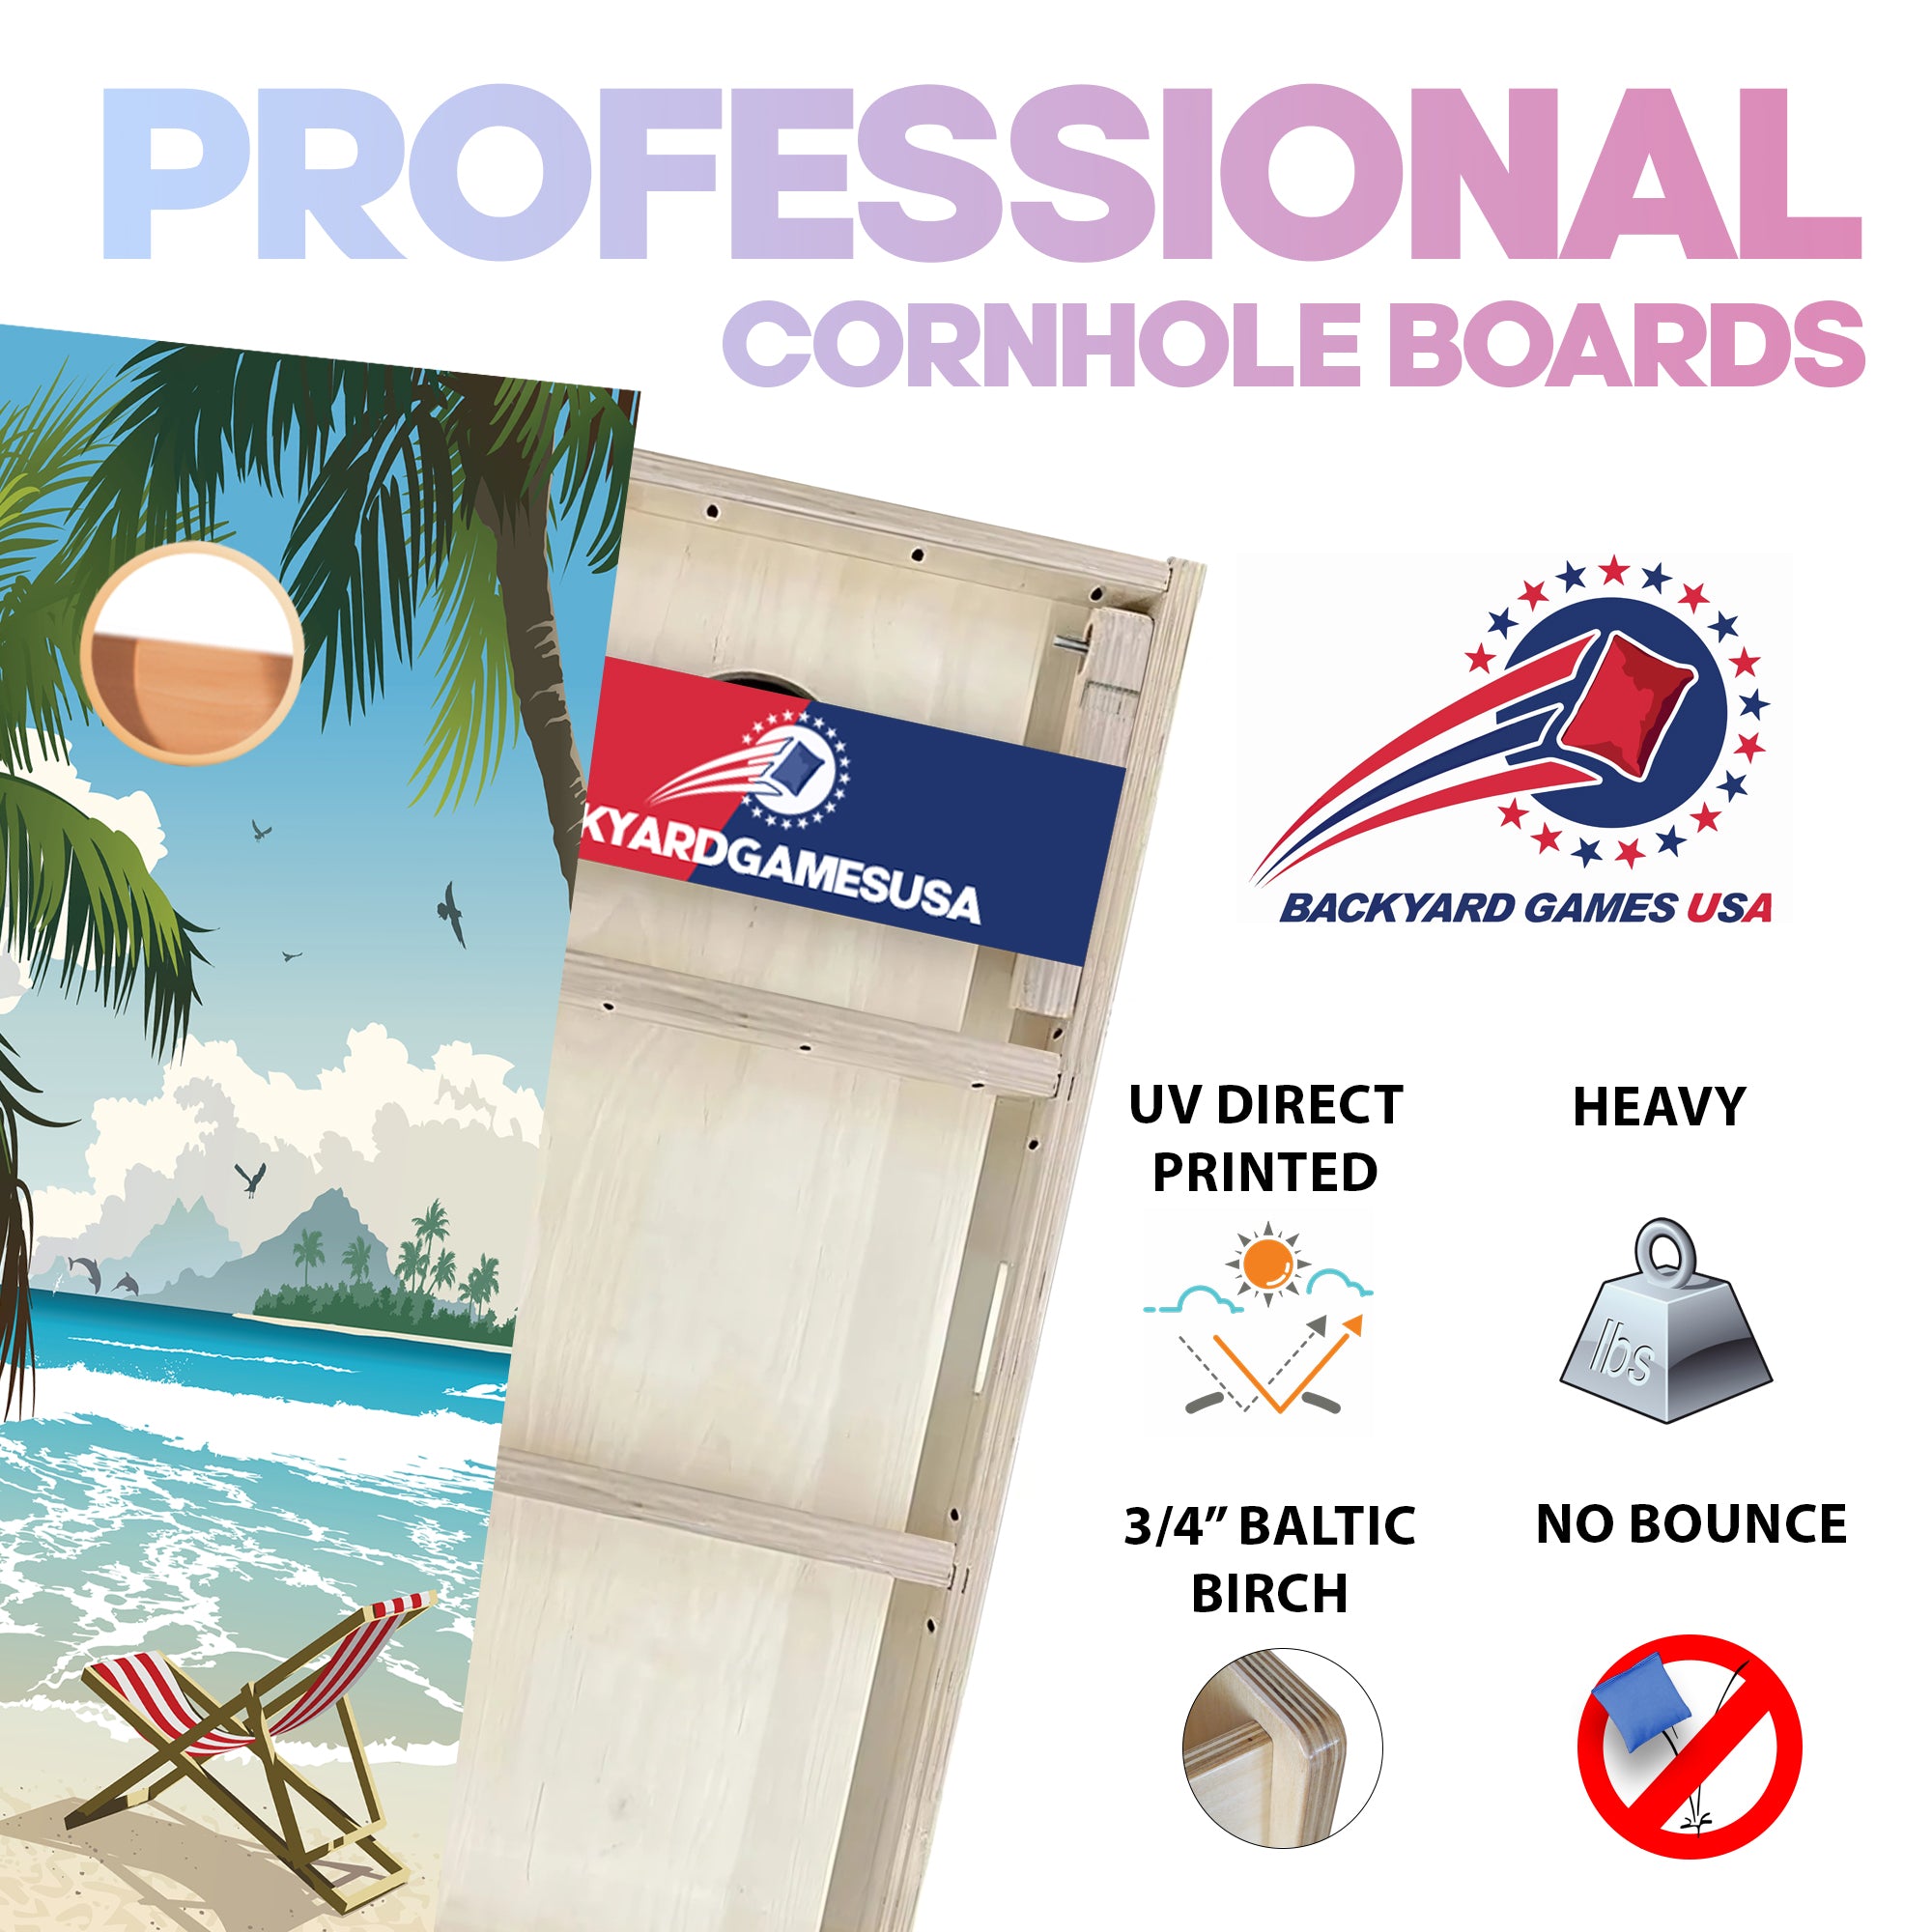 Tropical Chair Professional Cornhole Boards